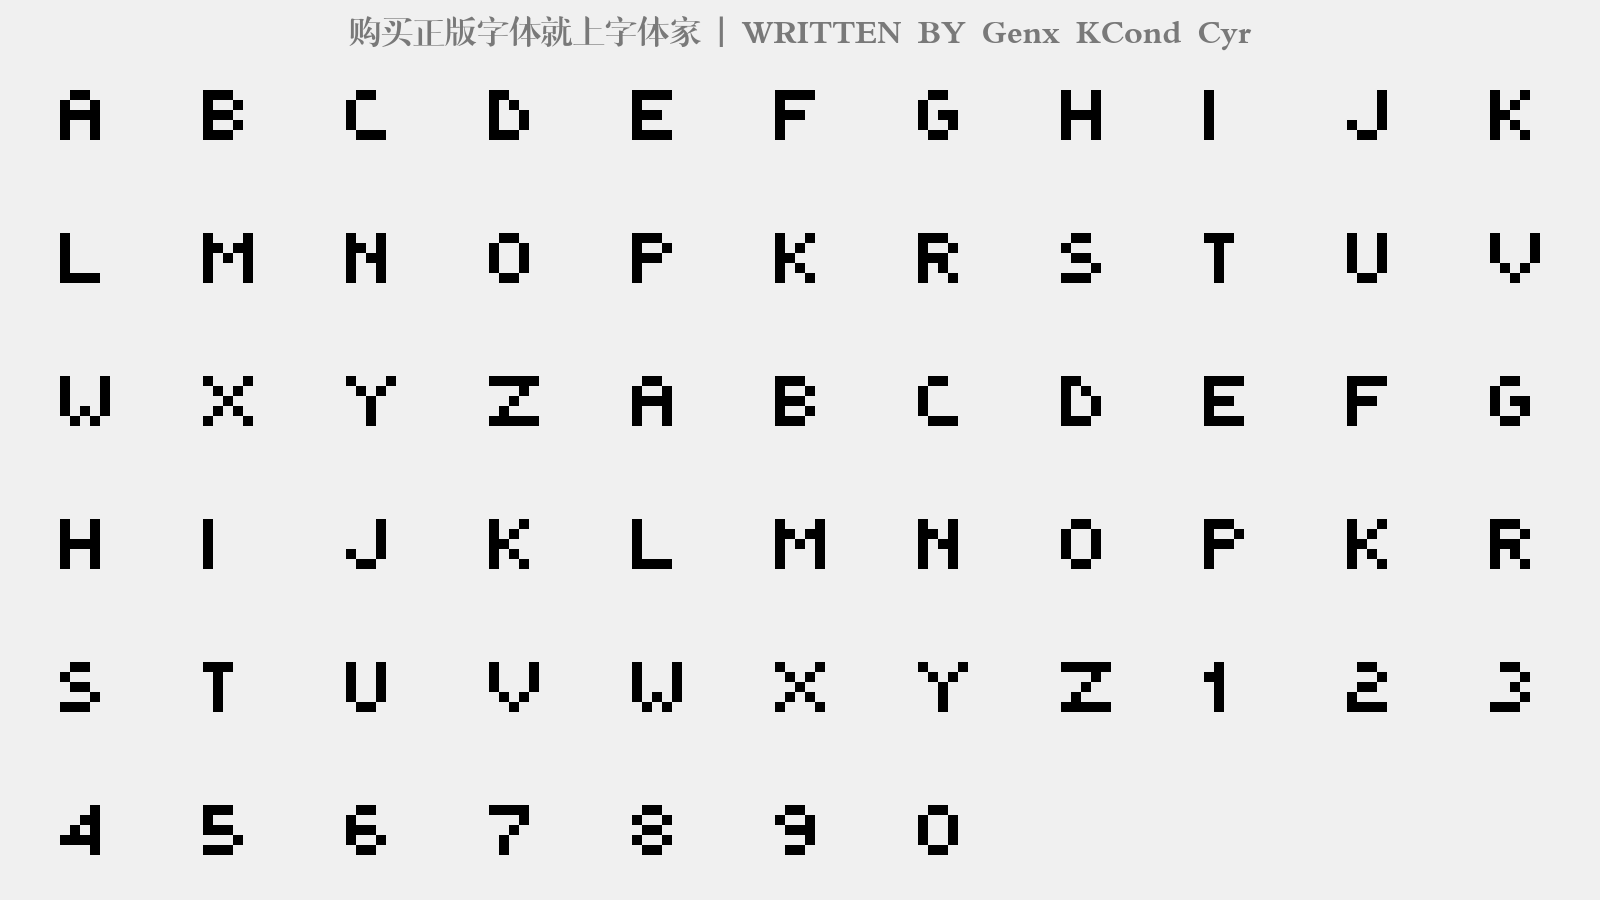 Genx KCond Cyr - 大写字母/小写字母/数字